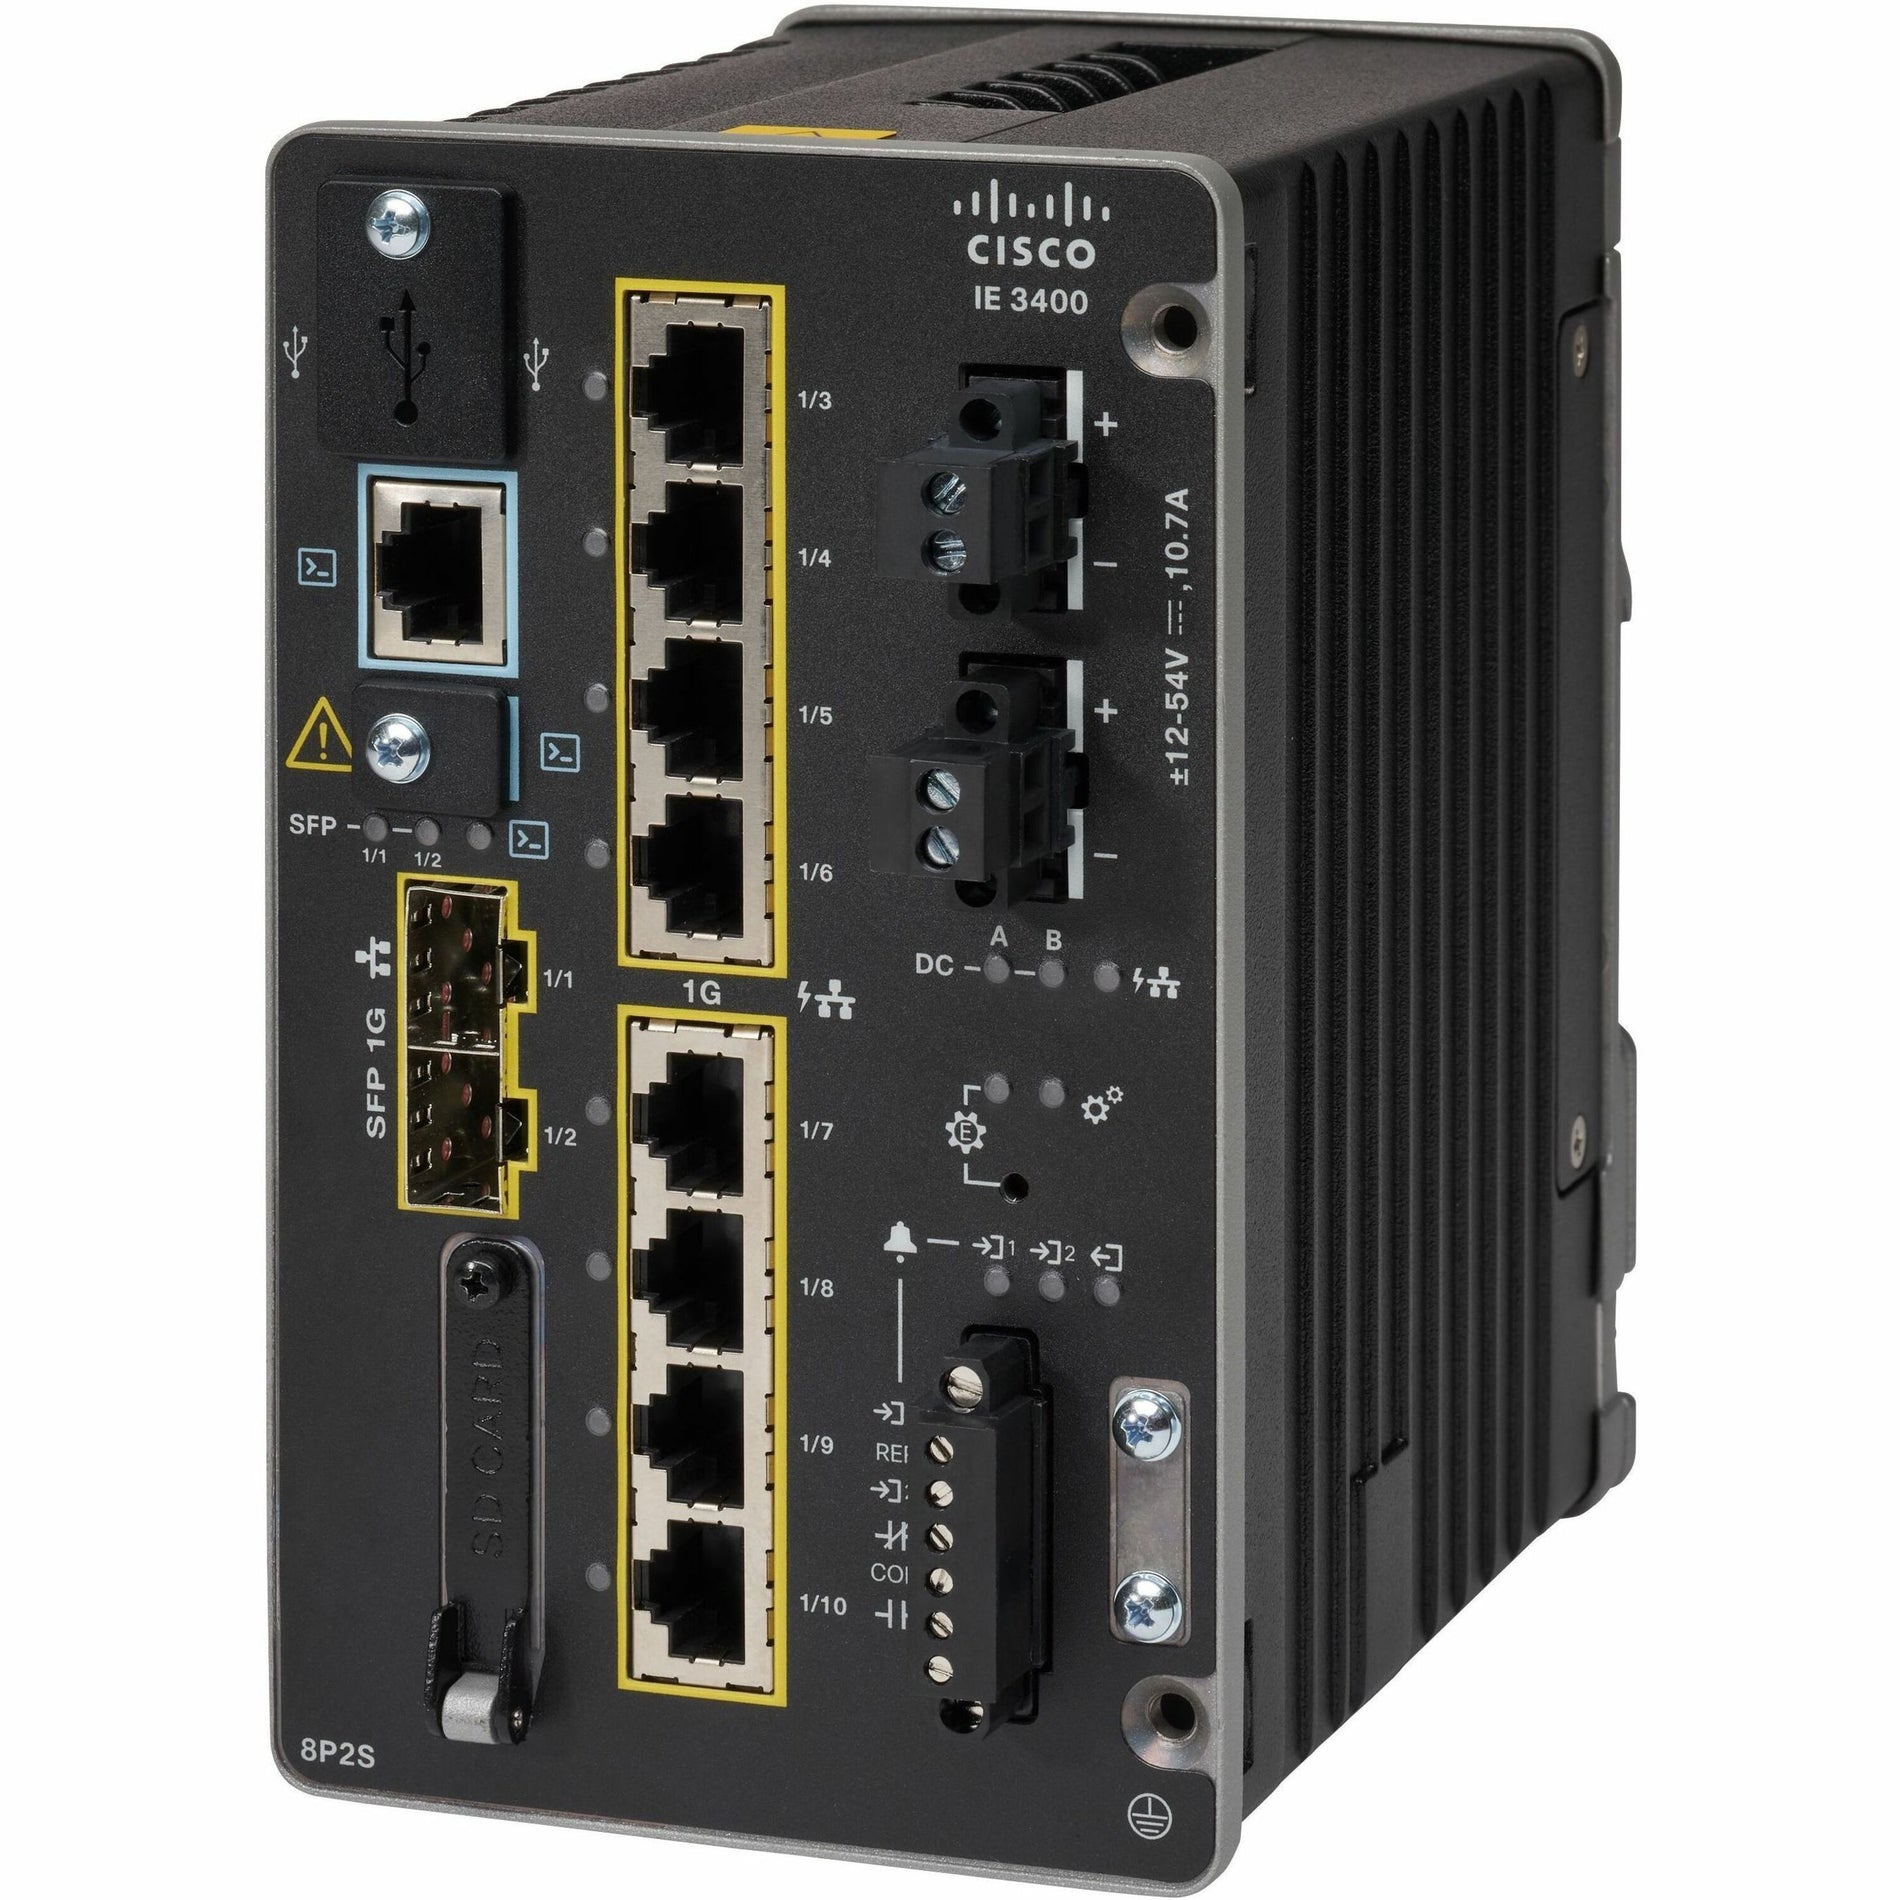 Cisco IE-3400-8P2S-E Catalyst Ethernet Switch, 8-Port Gigabit PoE+, DIN Rail Mountable